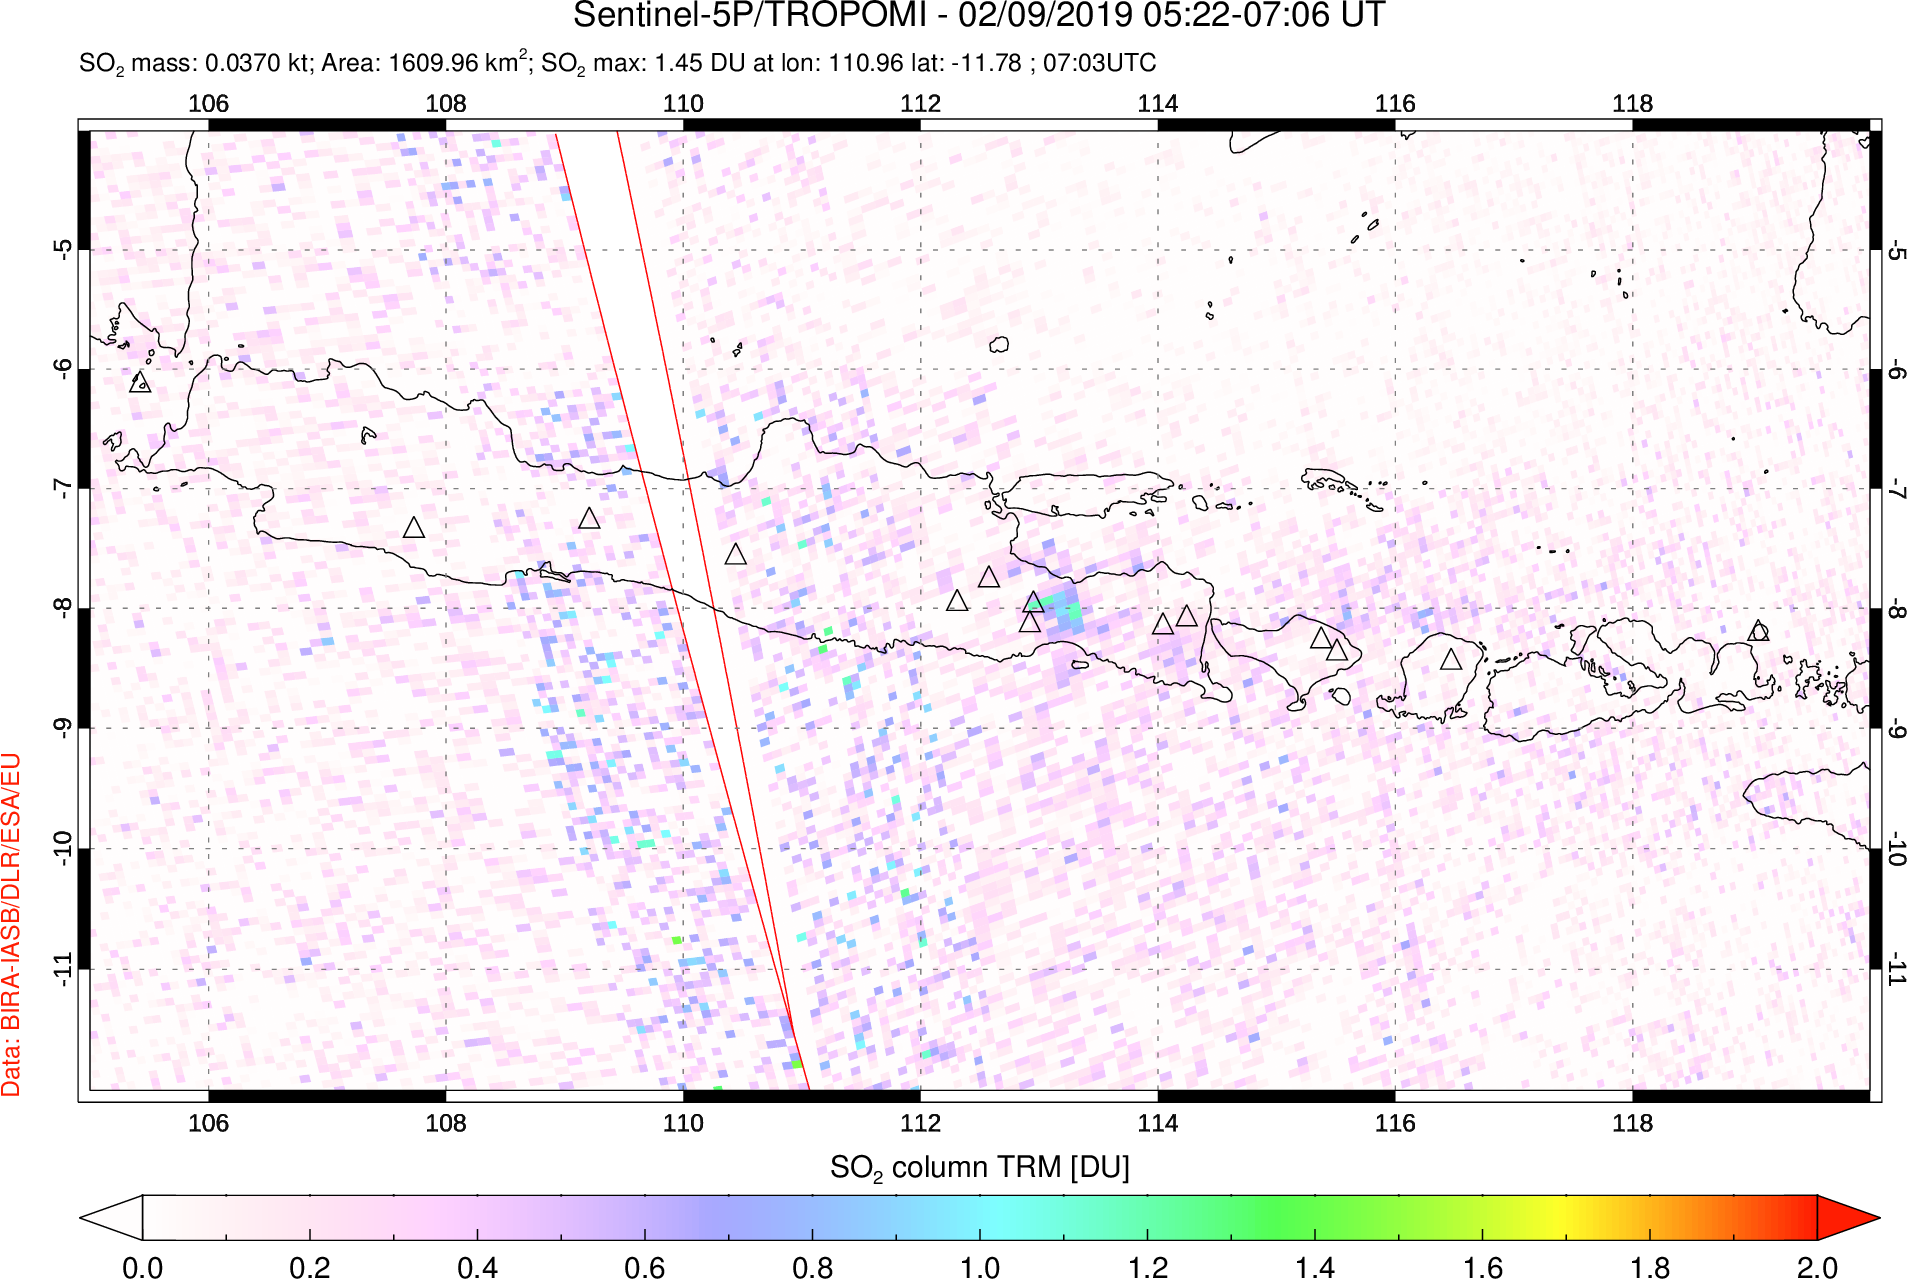 A sulfur dioxide image over Java, Indonesia on Feb 09, 2019.